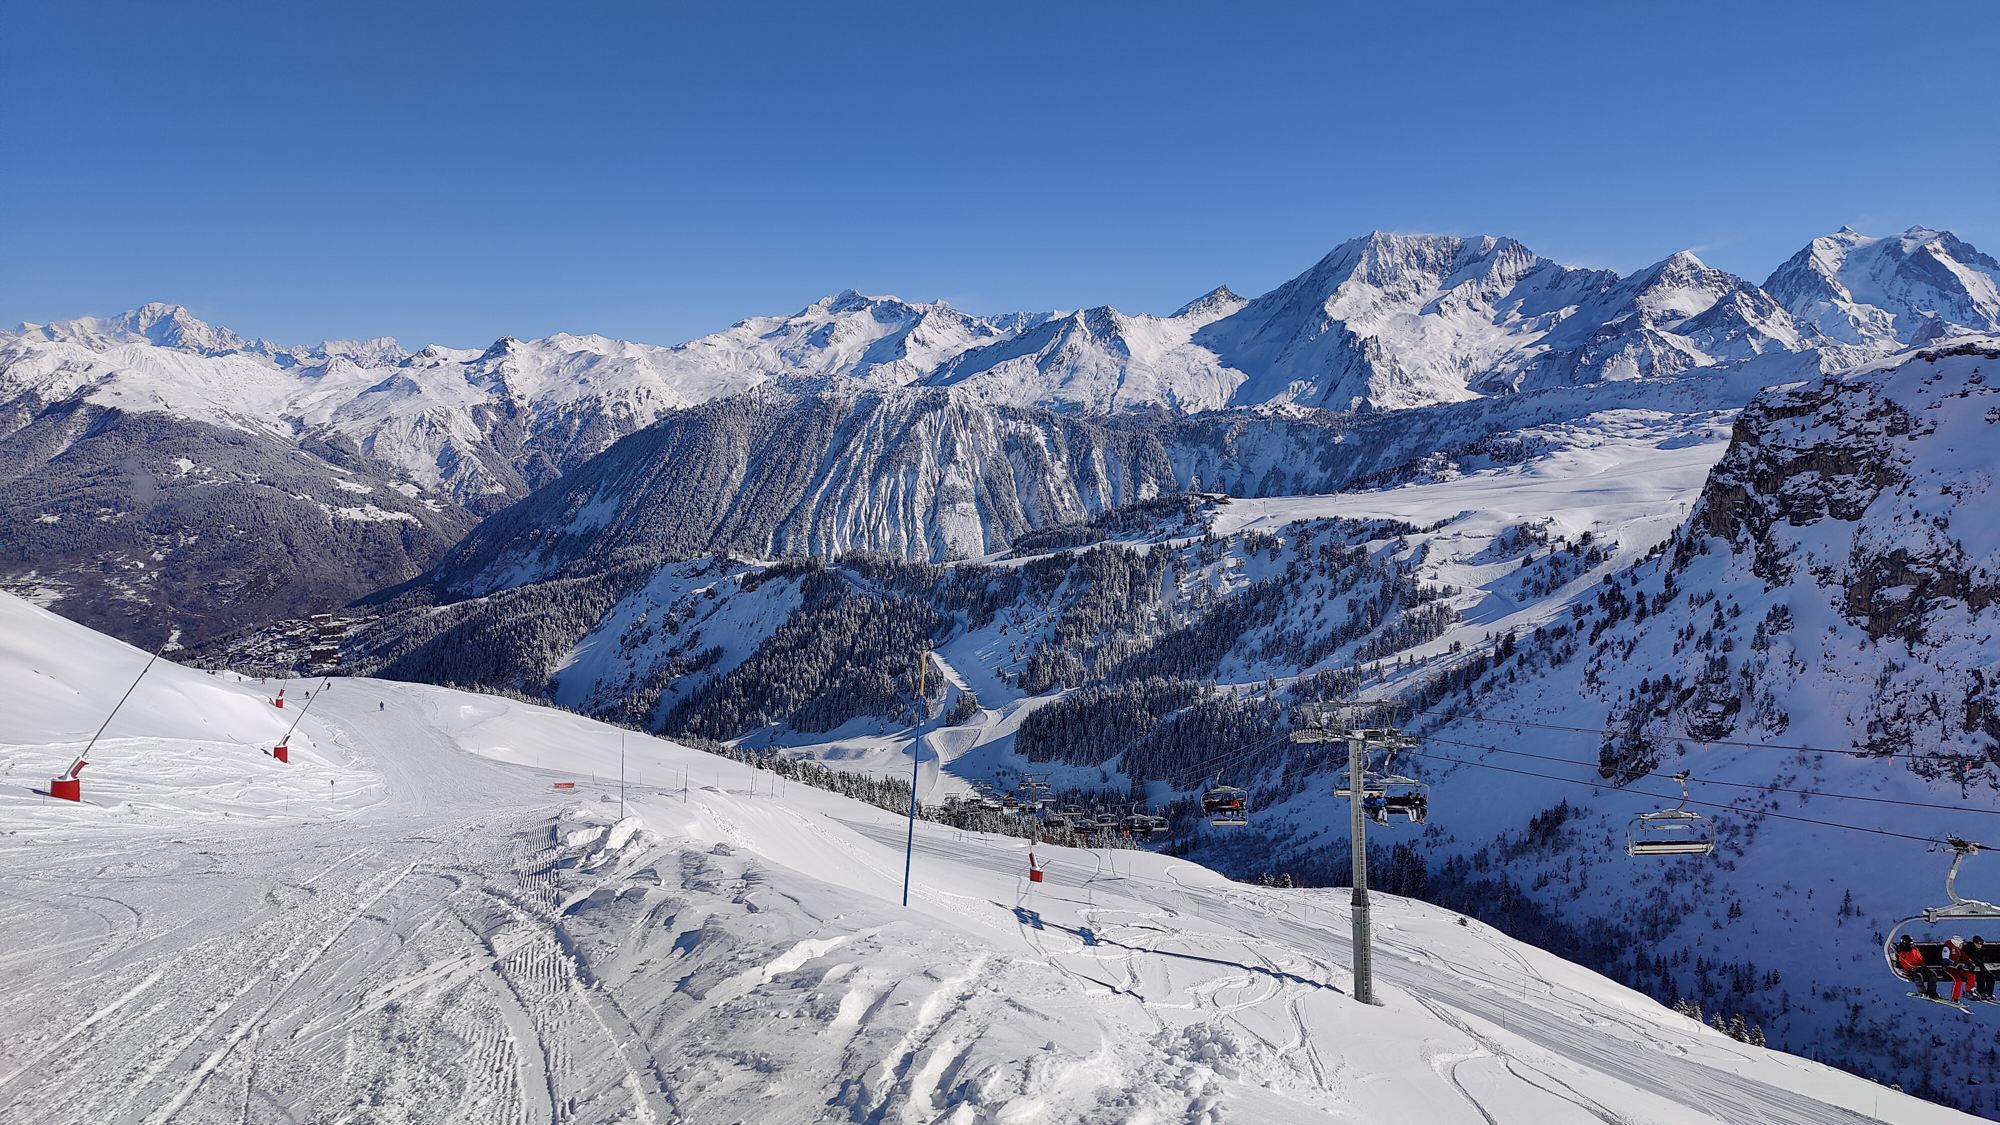 Courchevel / Meribel skiing views, March 2023